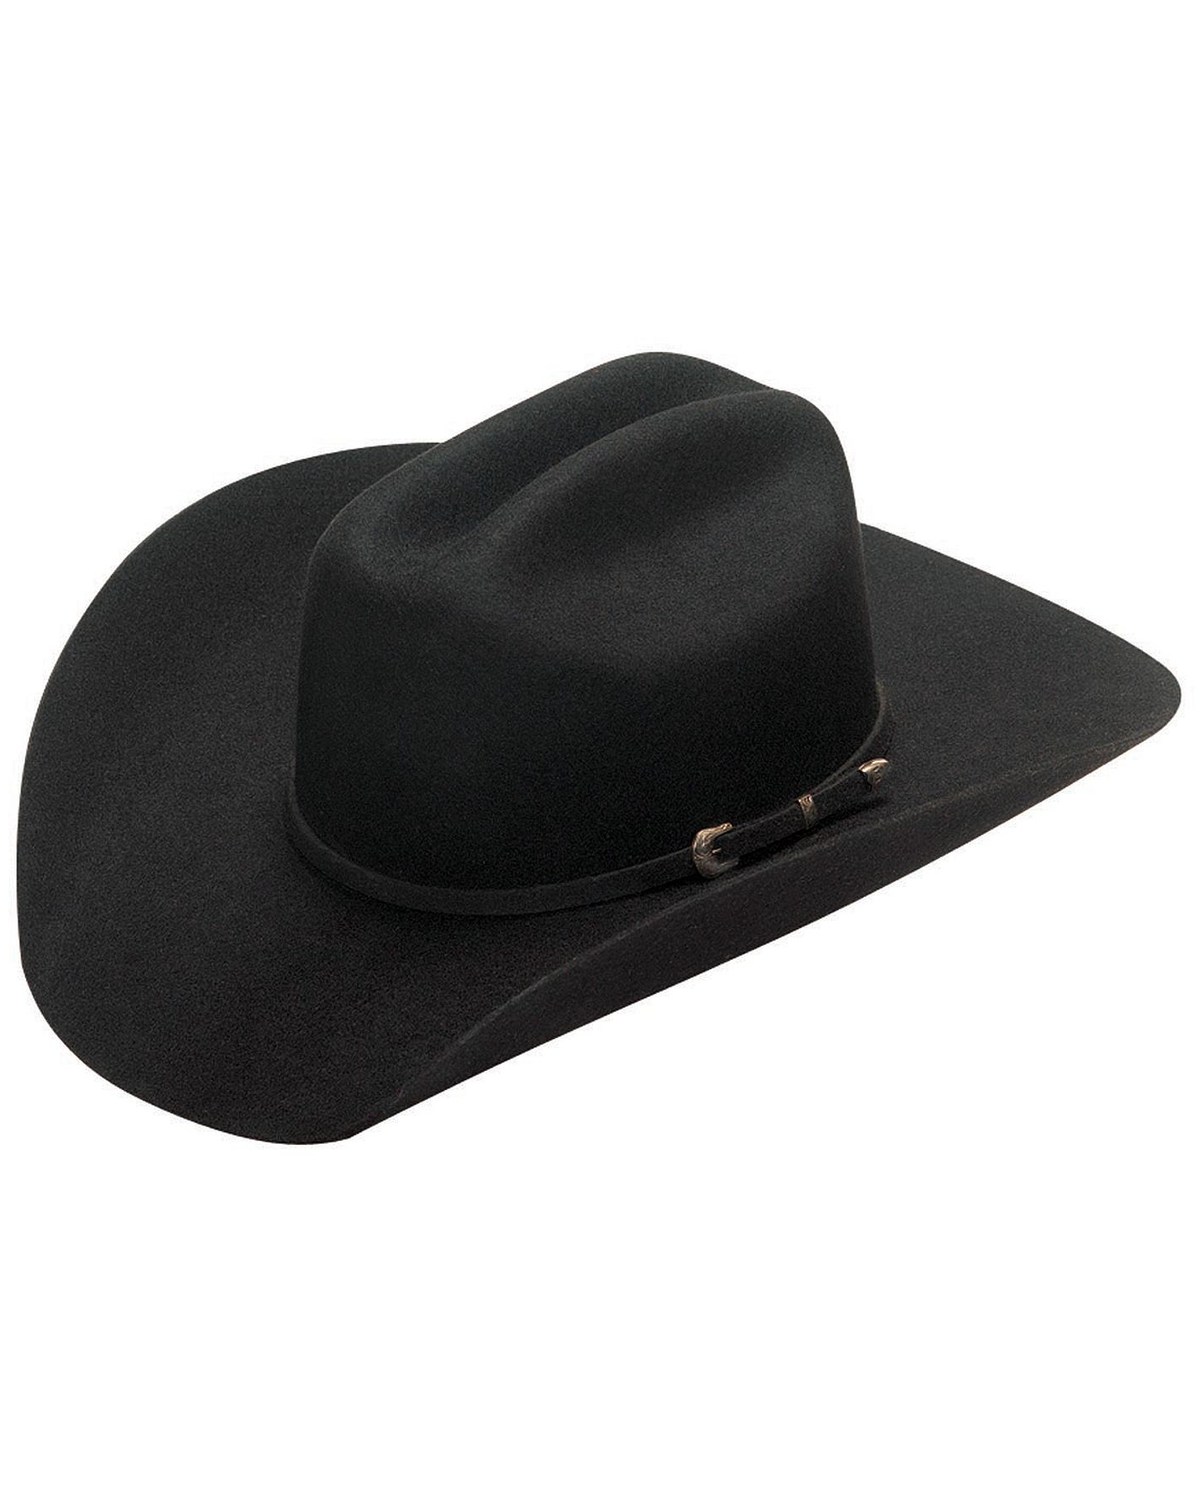 Black  Cowboy Cowgirl Hat Brigalow New Kids Dallas Felt Covered Hat 